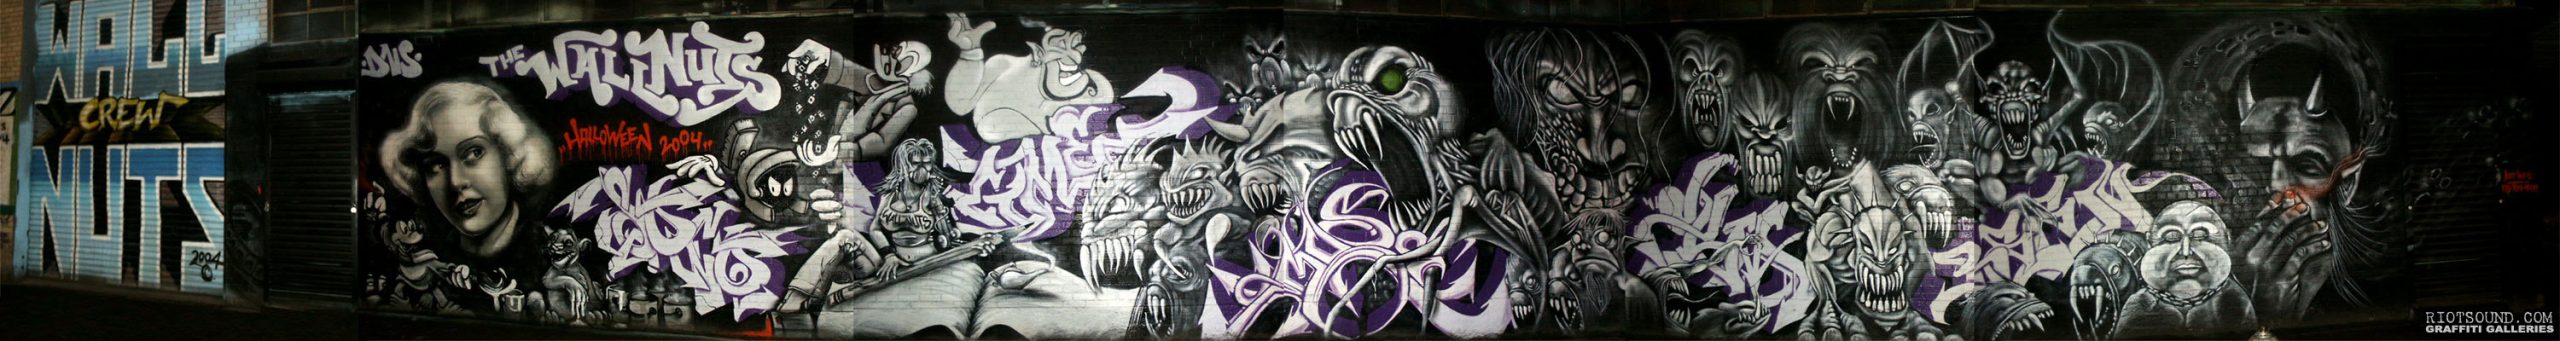 Queens Graffiti 02